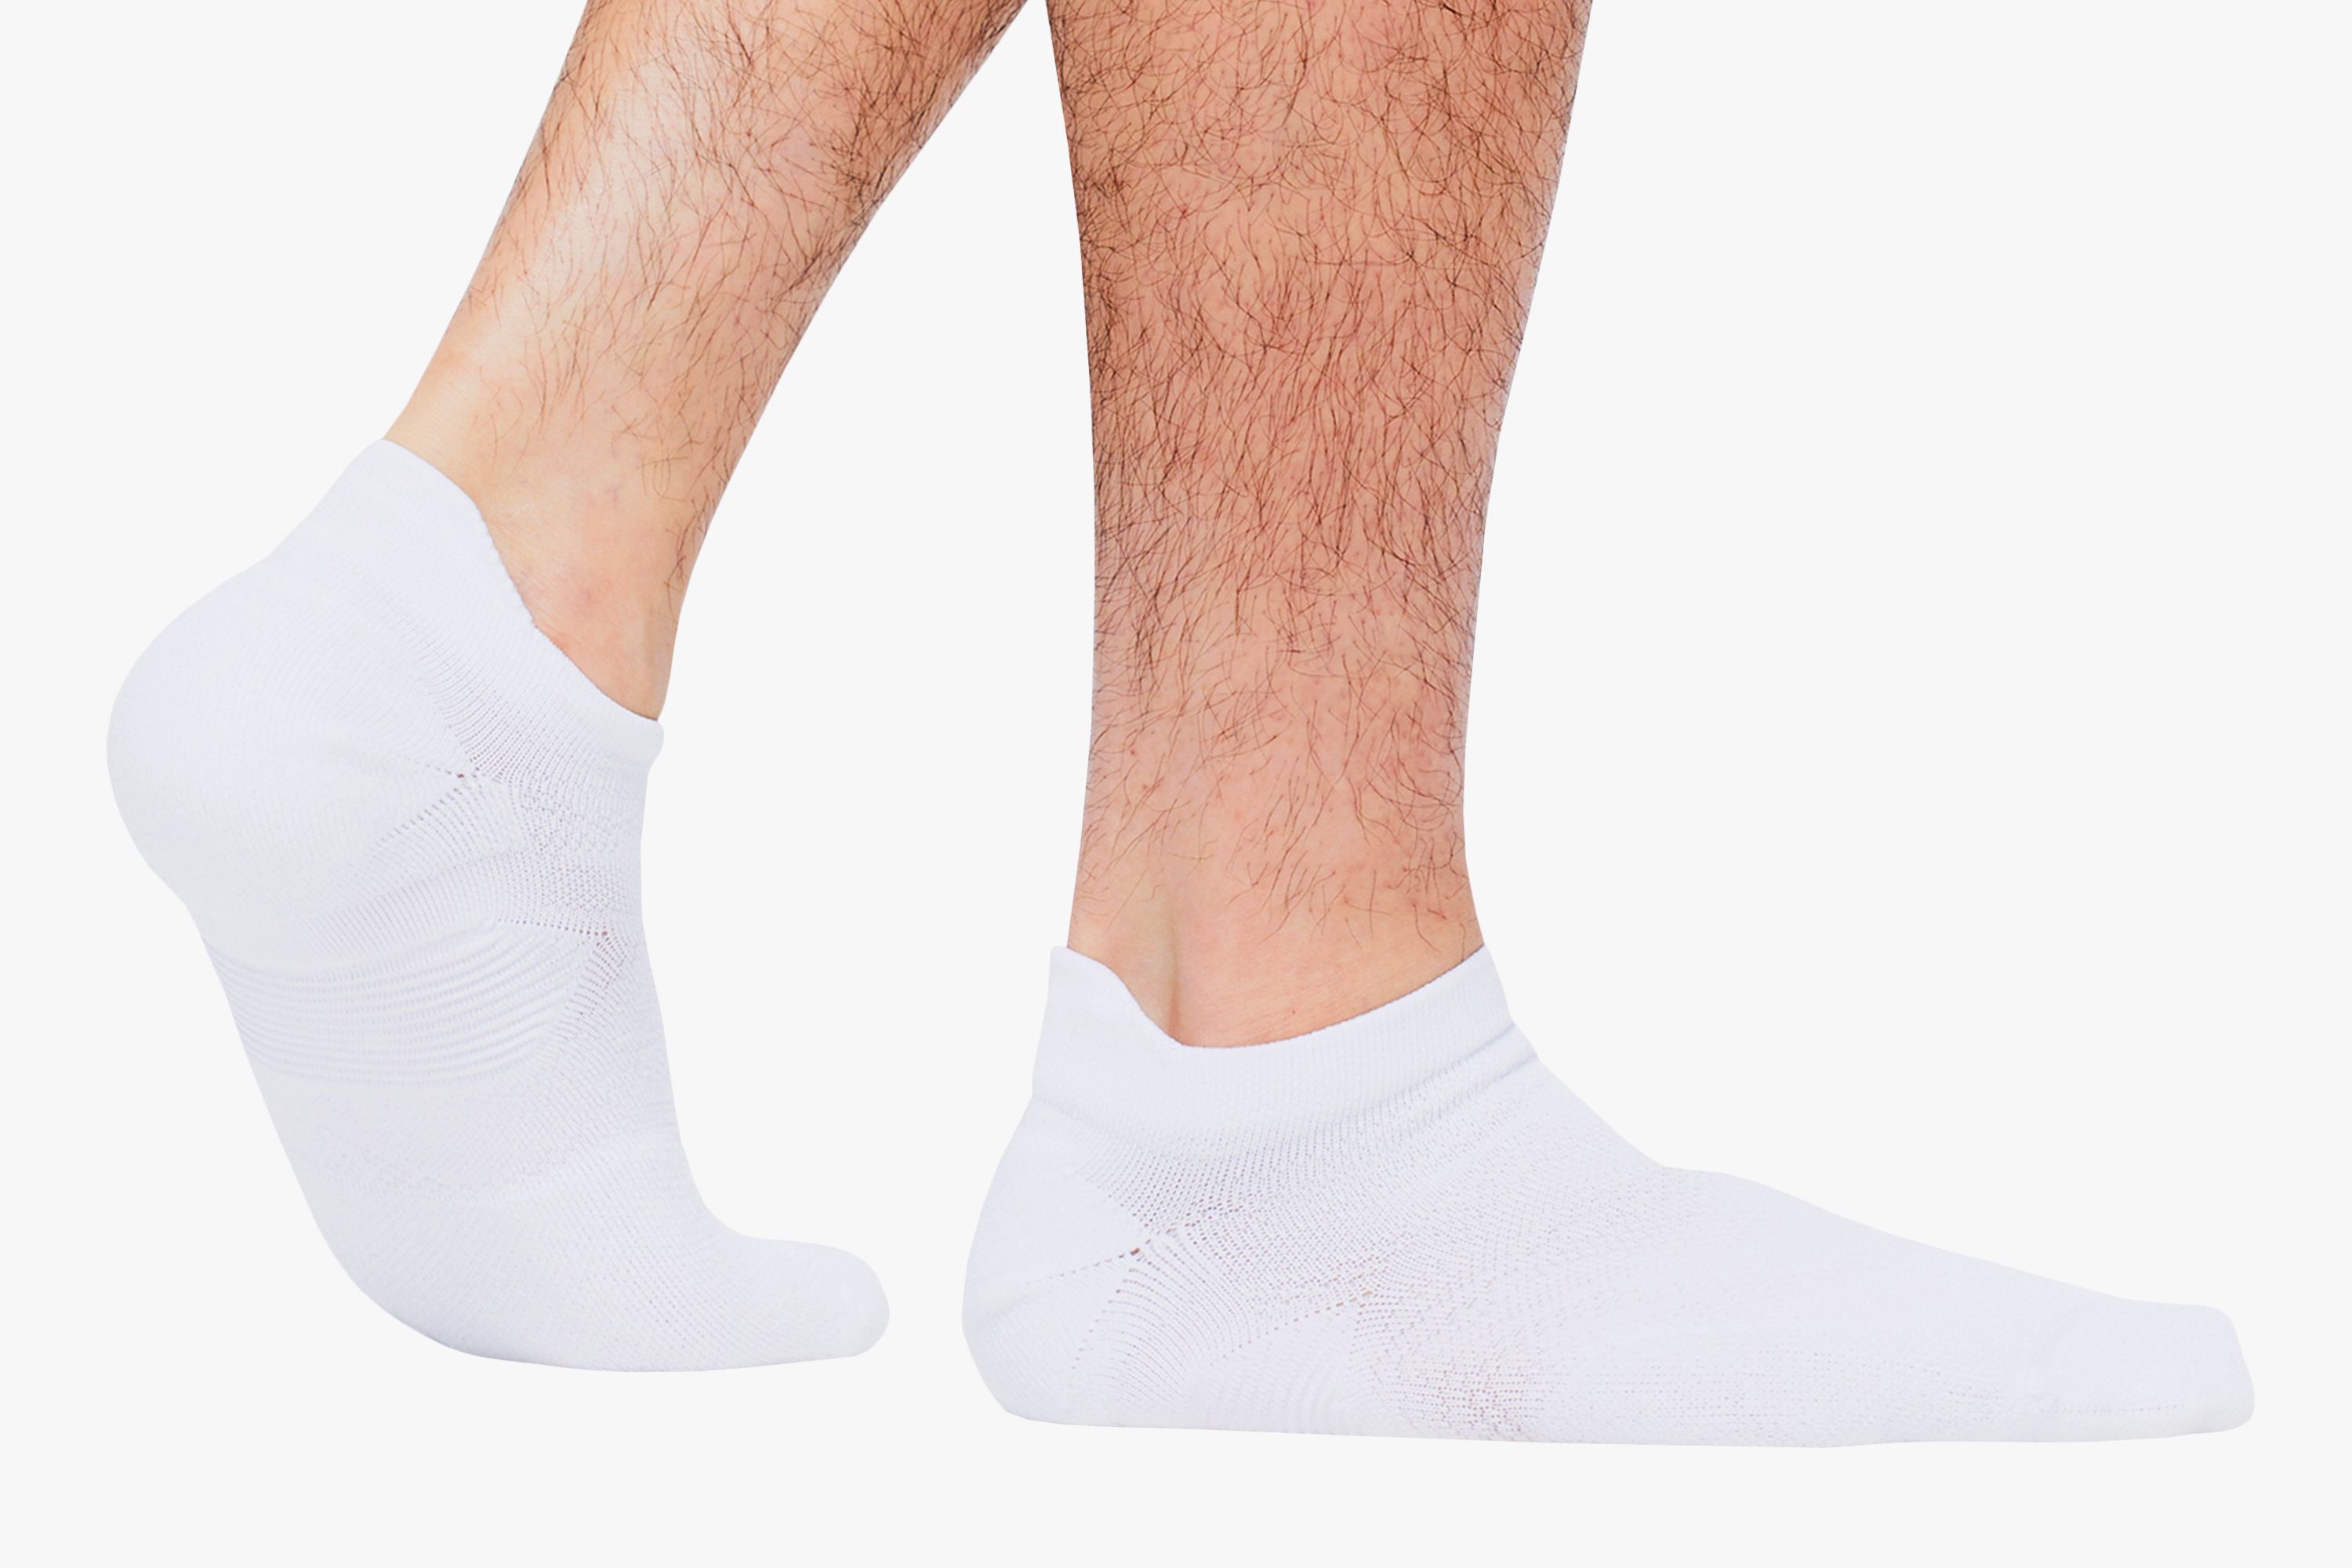 13 Best Running Socks to Buy in 2020 